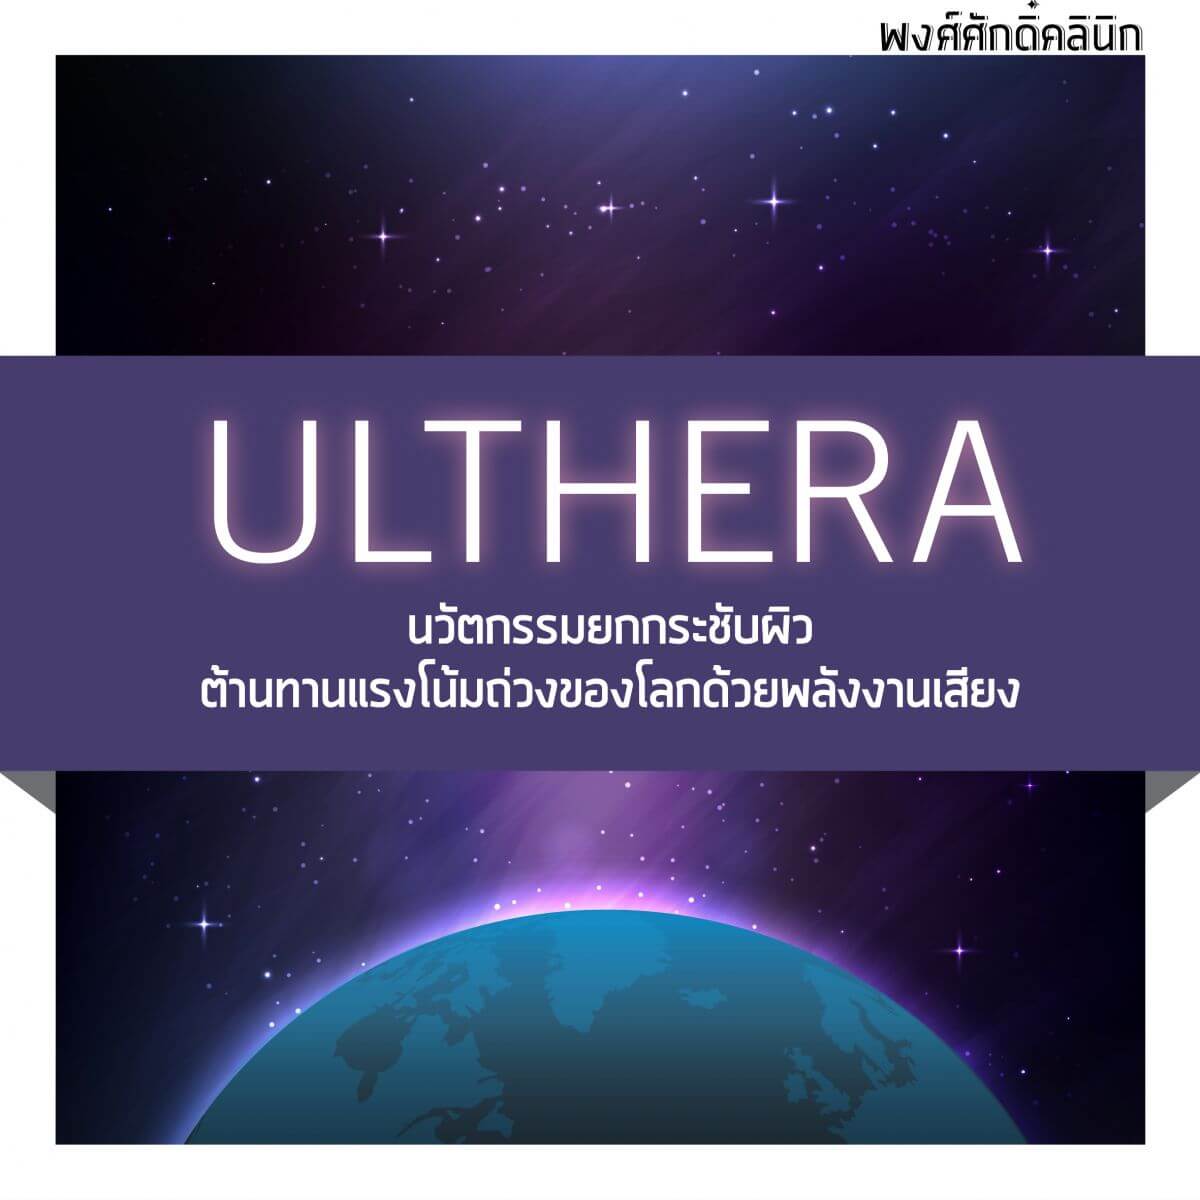 Ulthera Ultherapy Ulthera ราคา Ulthera คือ Ulthera รีวิว ยกกระชับหน้า เครื่องยกกระชับหน้า pongsakclinic